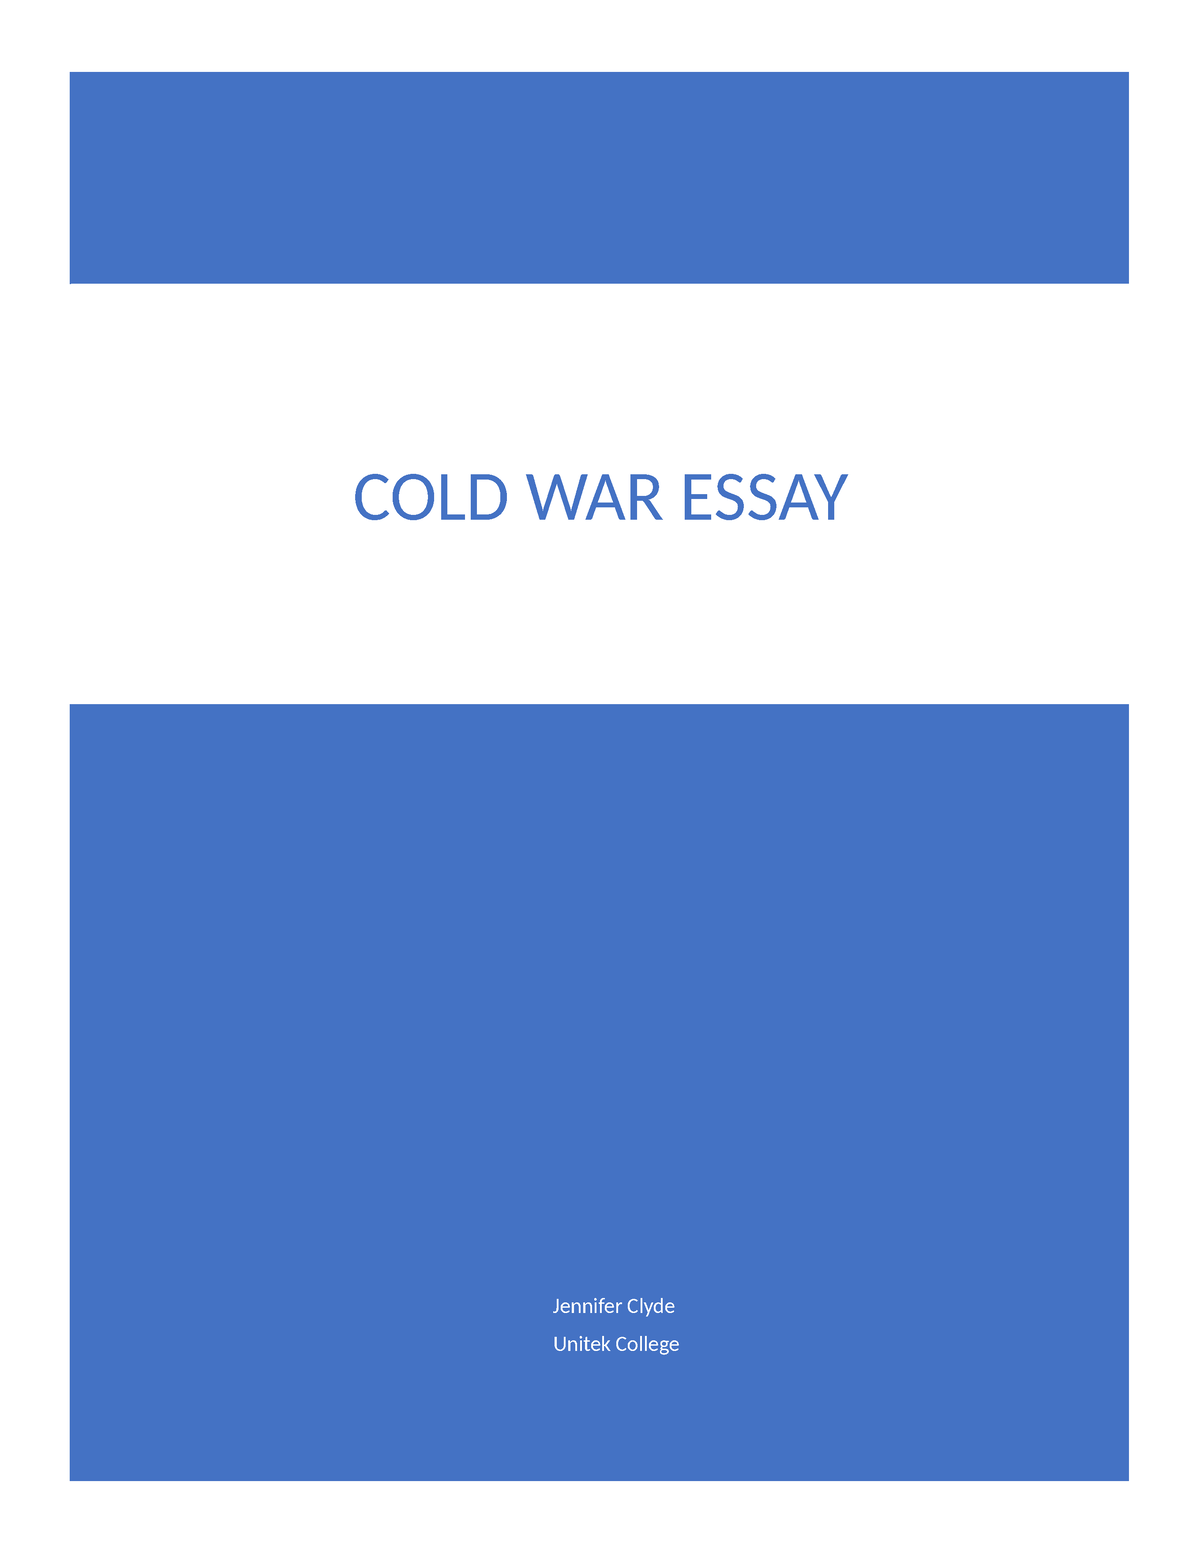 history essay cold war